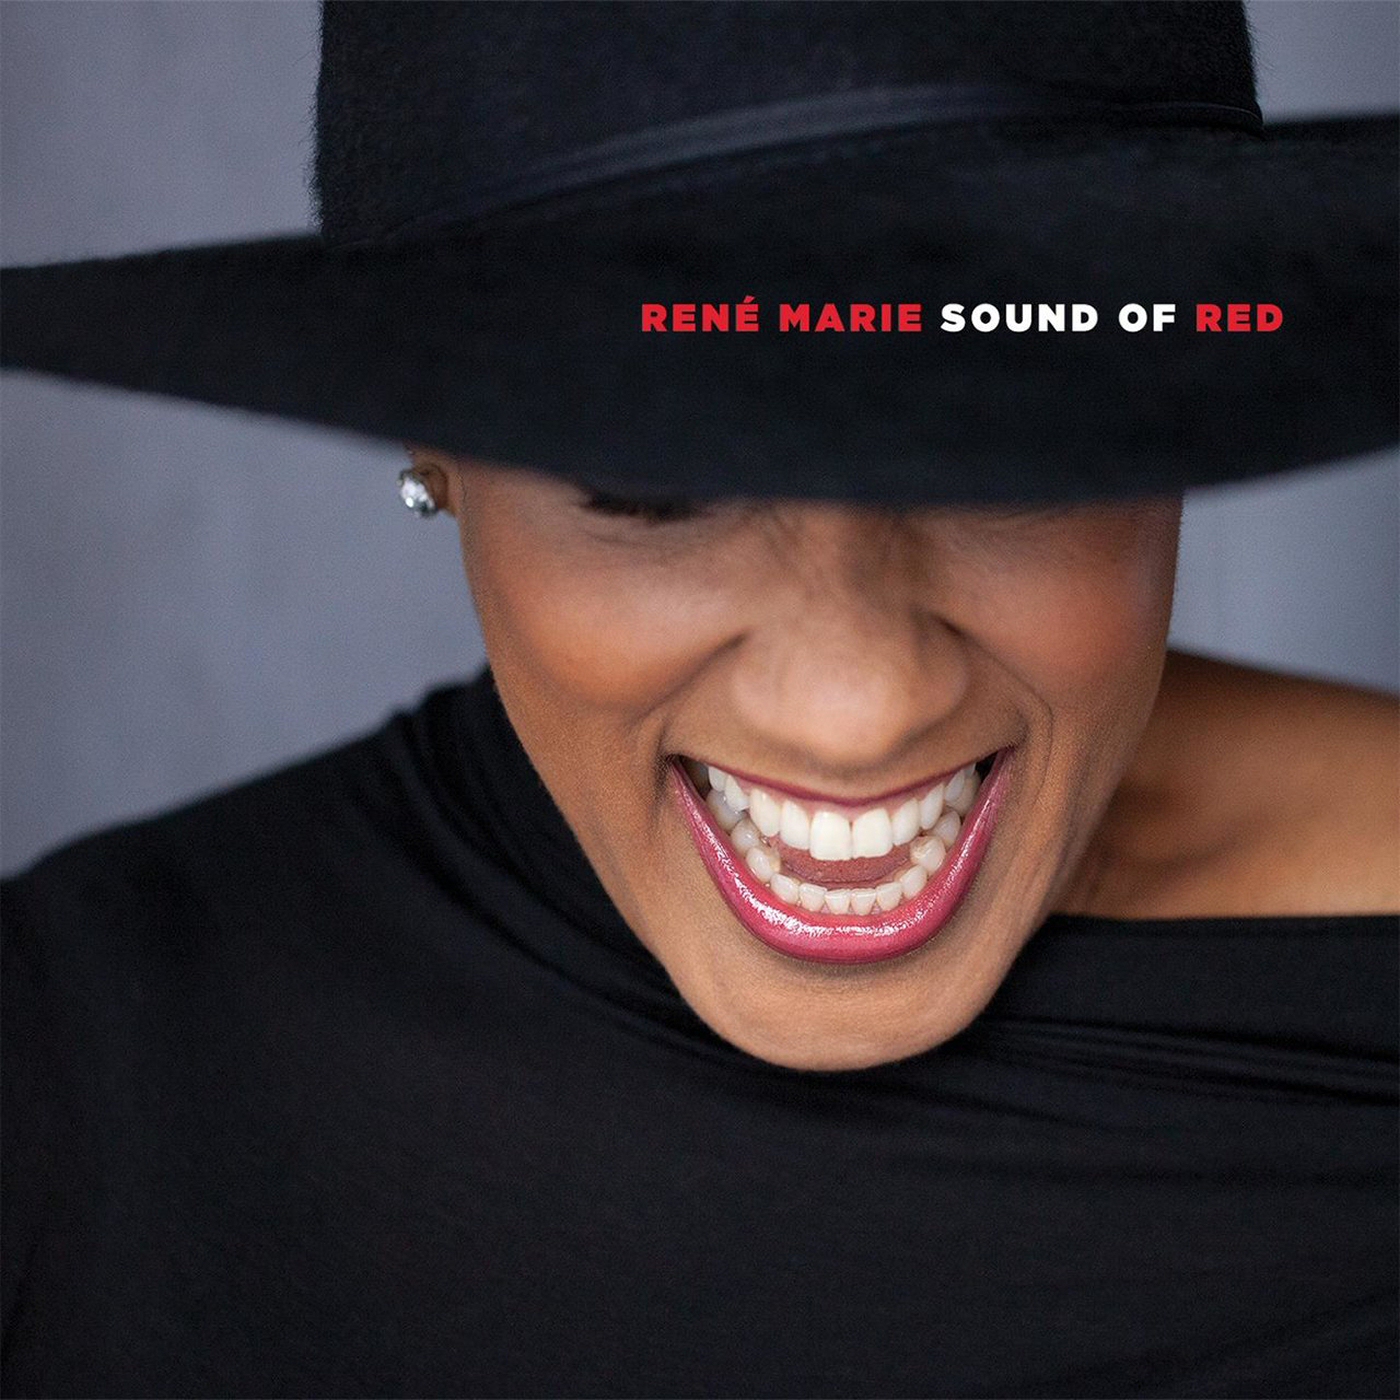 Günün Parçası: "Sound Of Red" (René Marie, 2016)